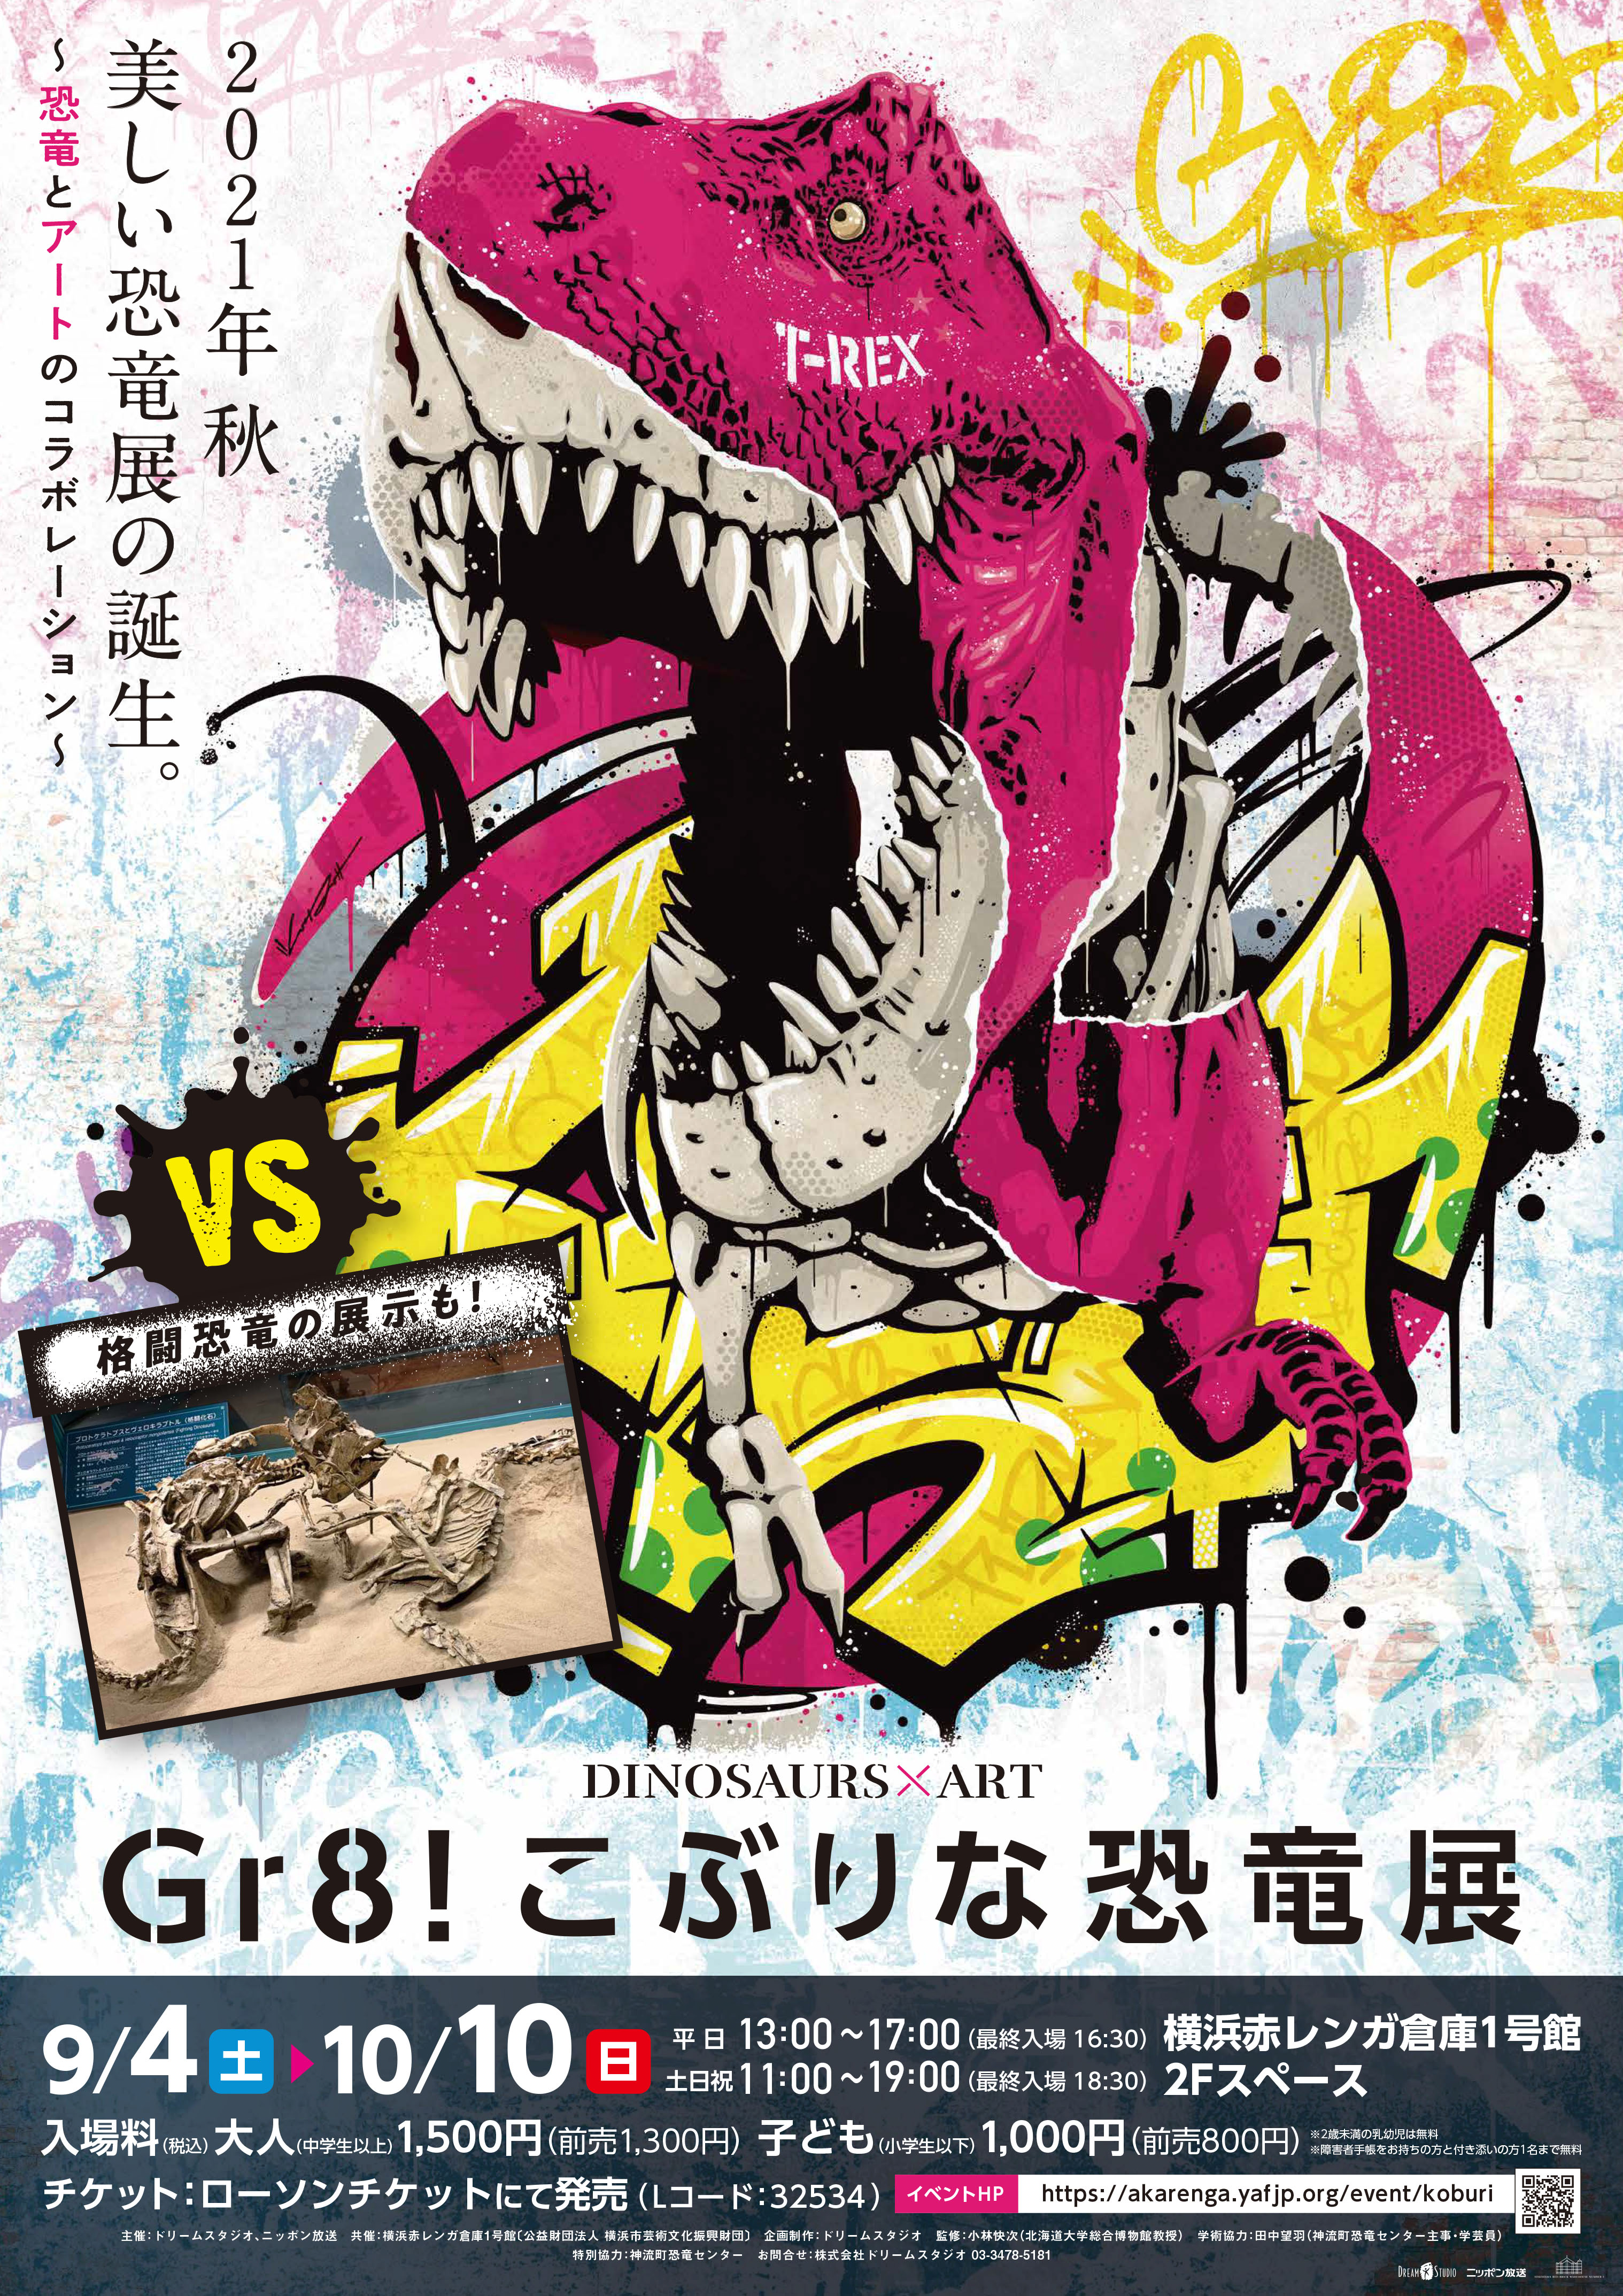 Gr8 こぶりな恐竜展 恐竜とアートのコラボレーション 株式会社ポニーキャニオンのプレスリリース